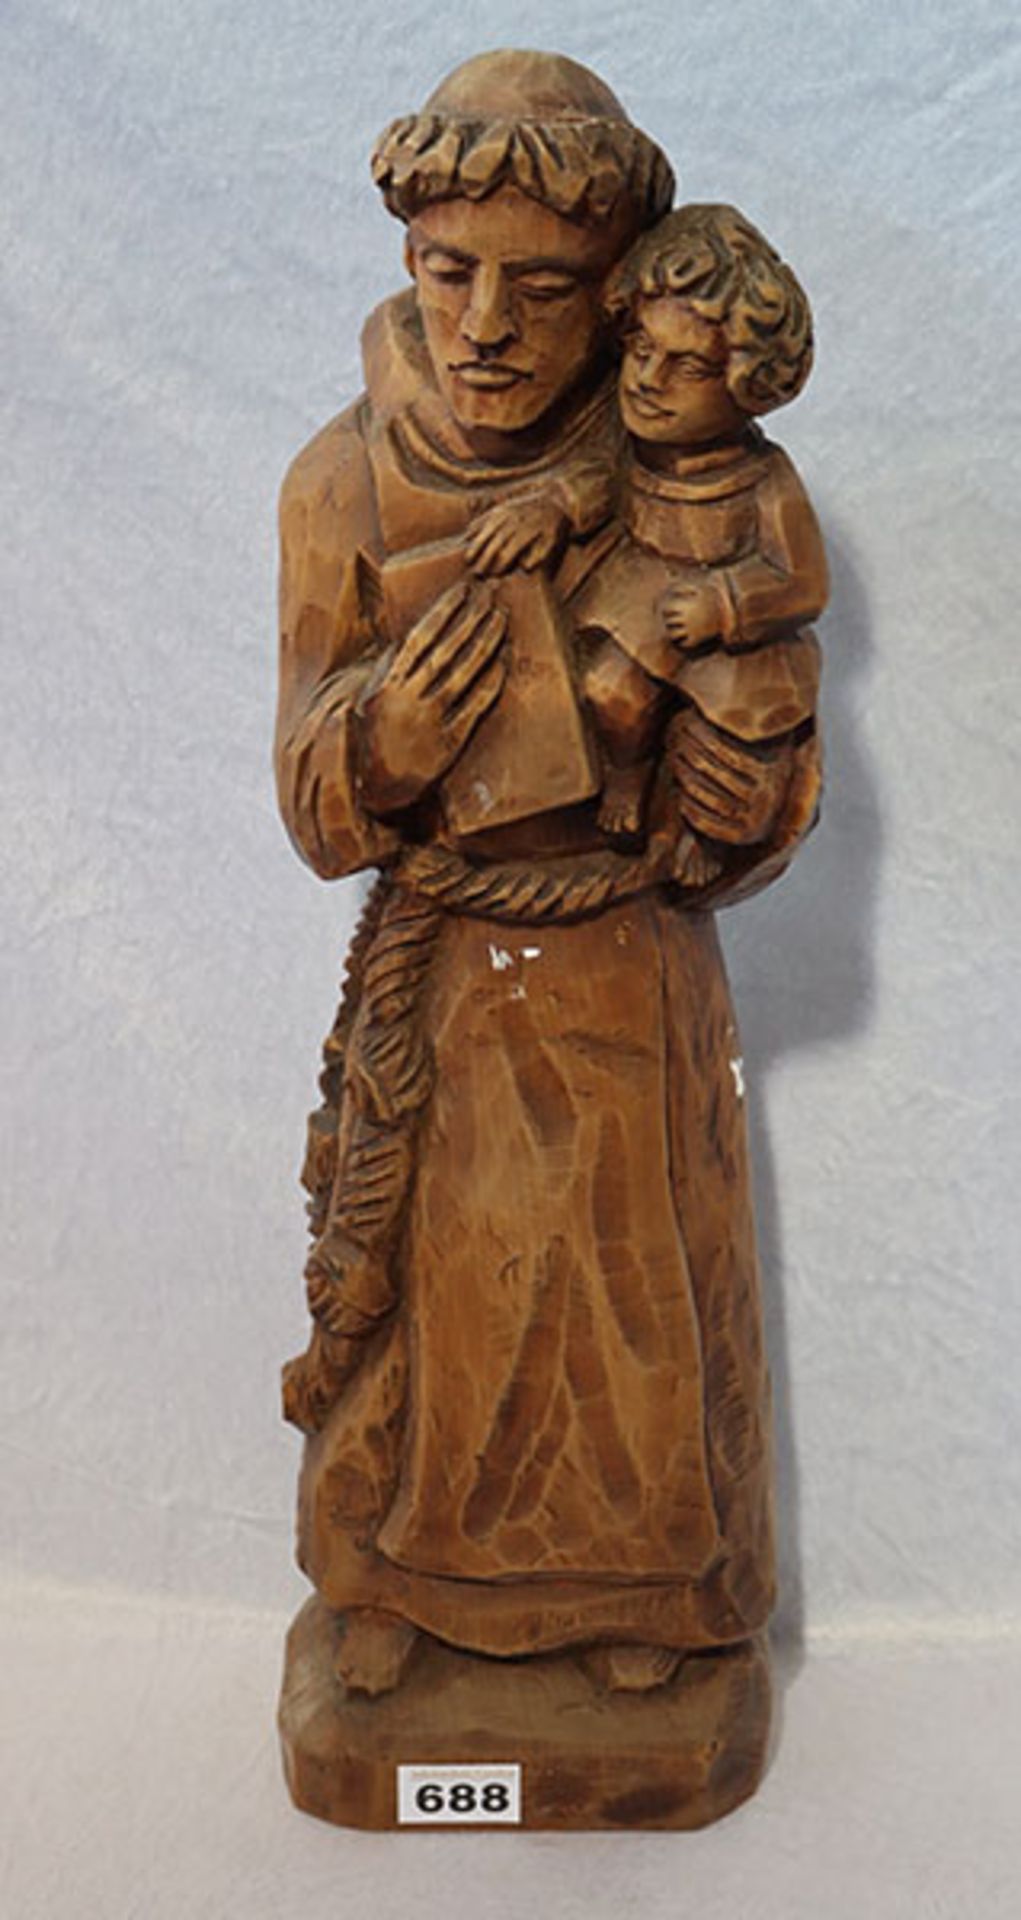 Holzfigur 'Heiliger Antonius', gebeizt, H 52,5 cm, teils fleckig